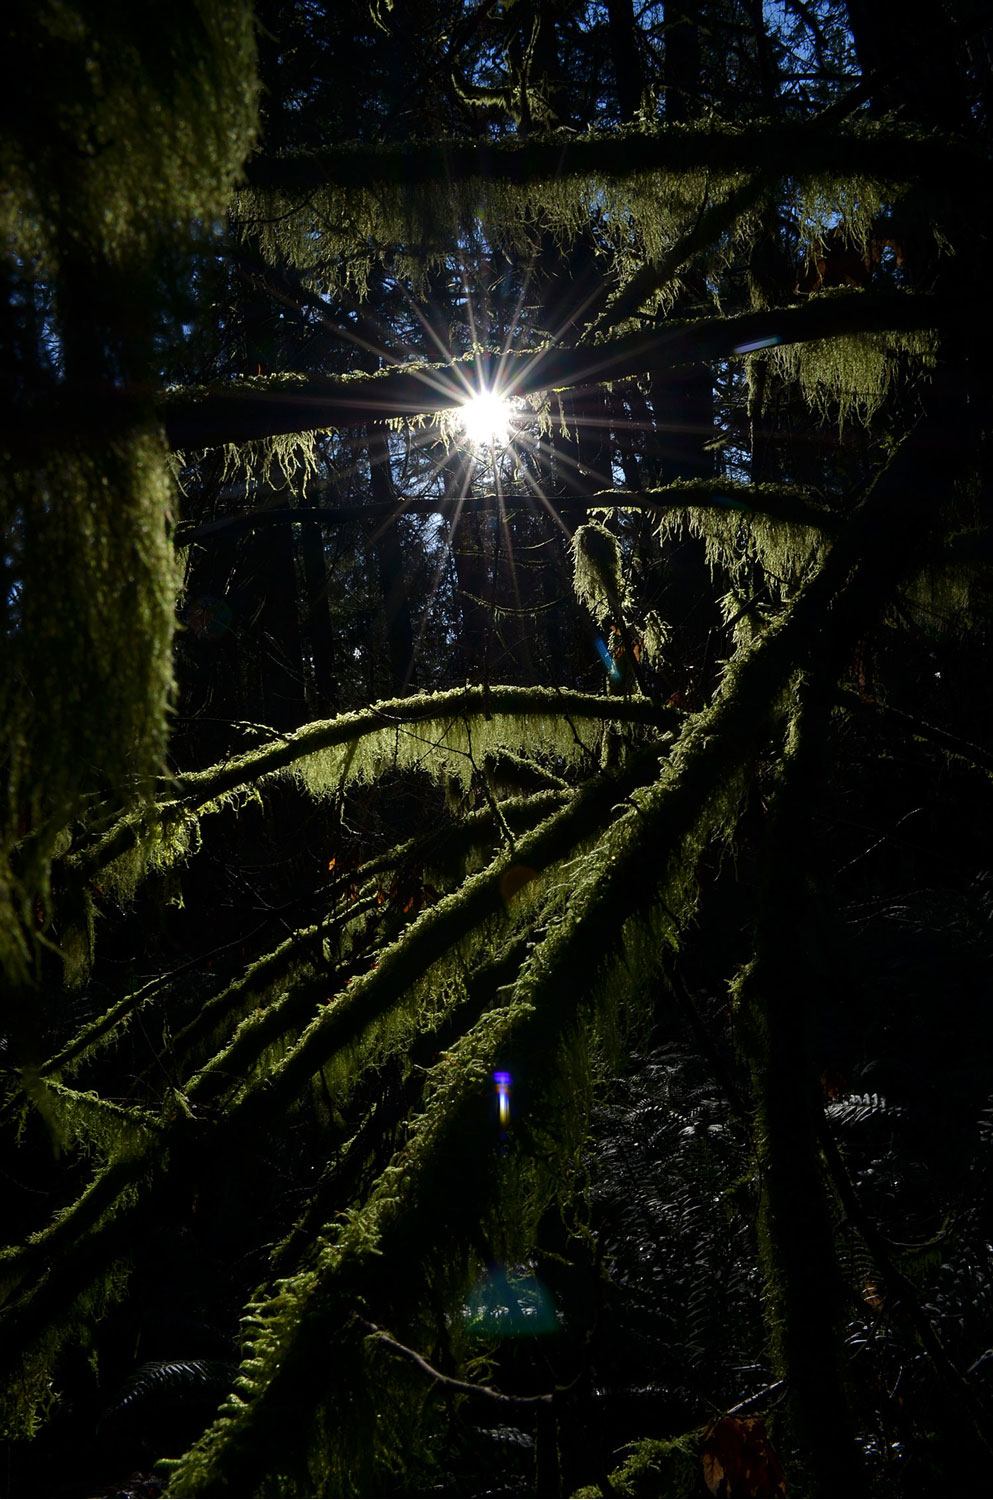 Sun shining through hanging lichen on branches